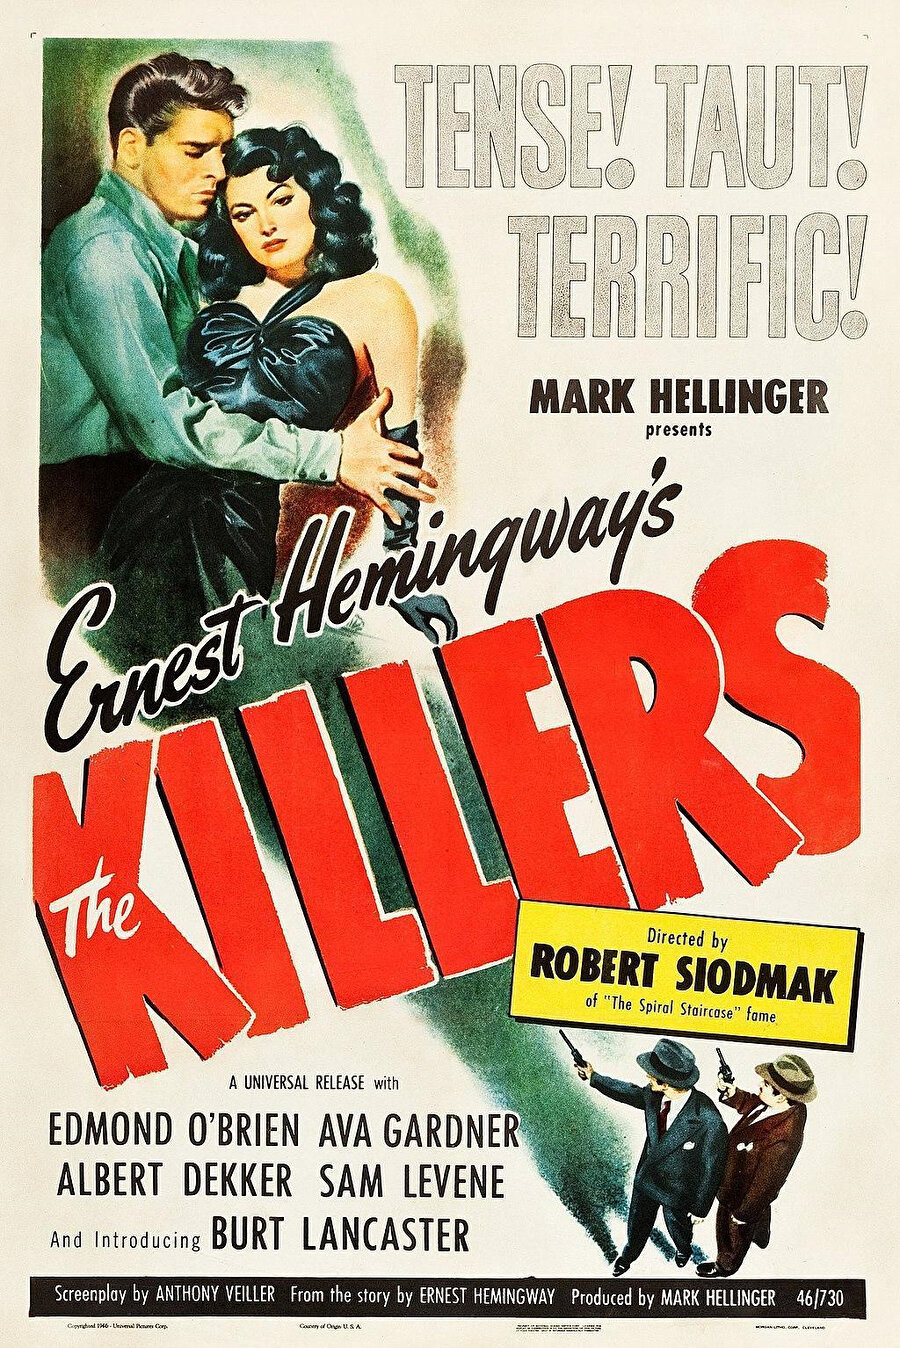 Hemingway'in ''The Killers'' isimli kısa hikayesinin posteri.